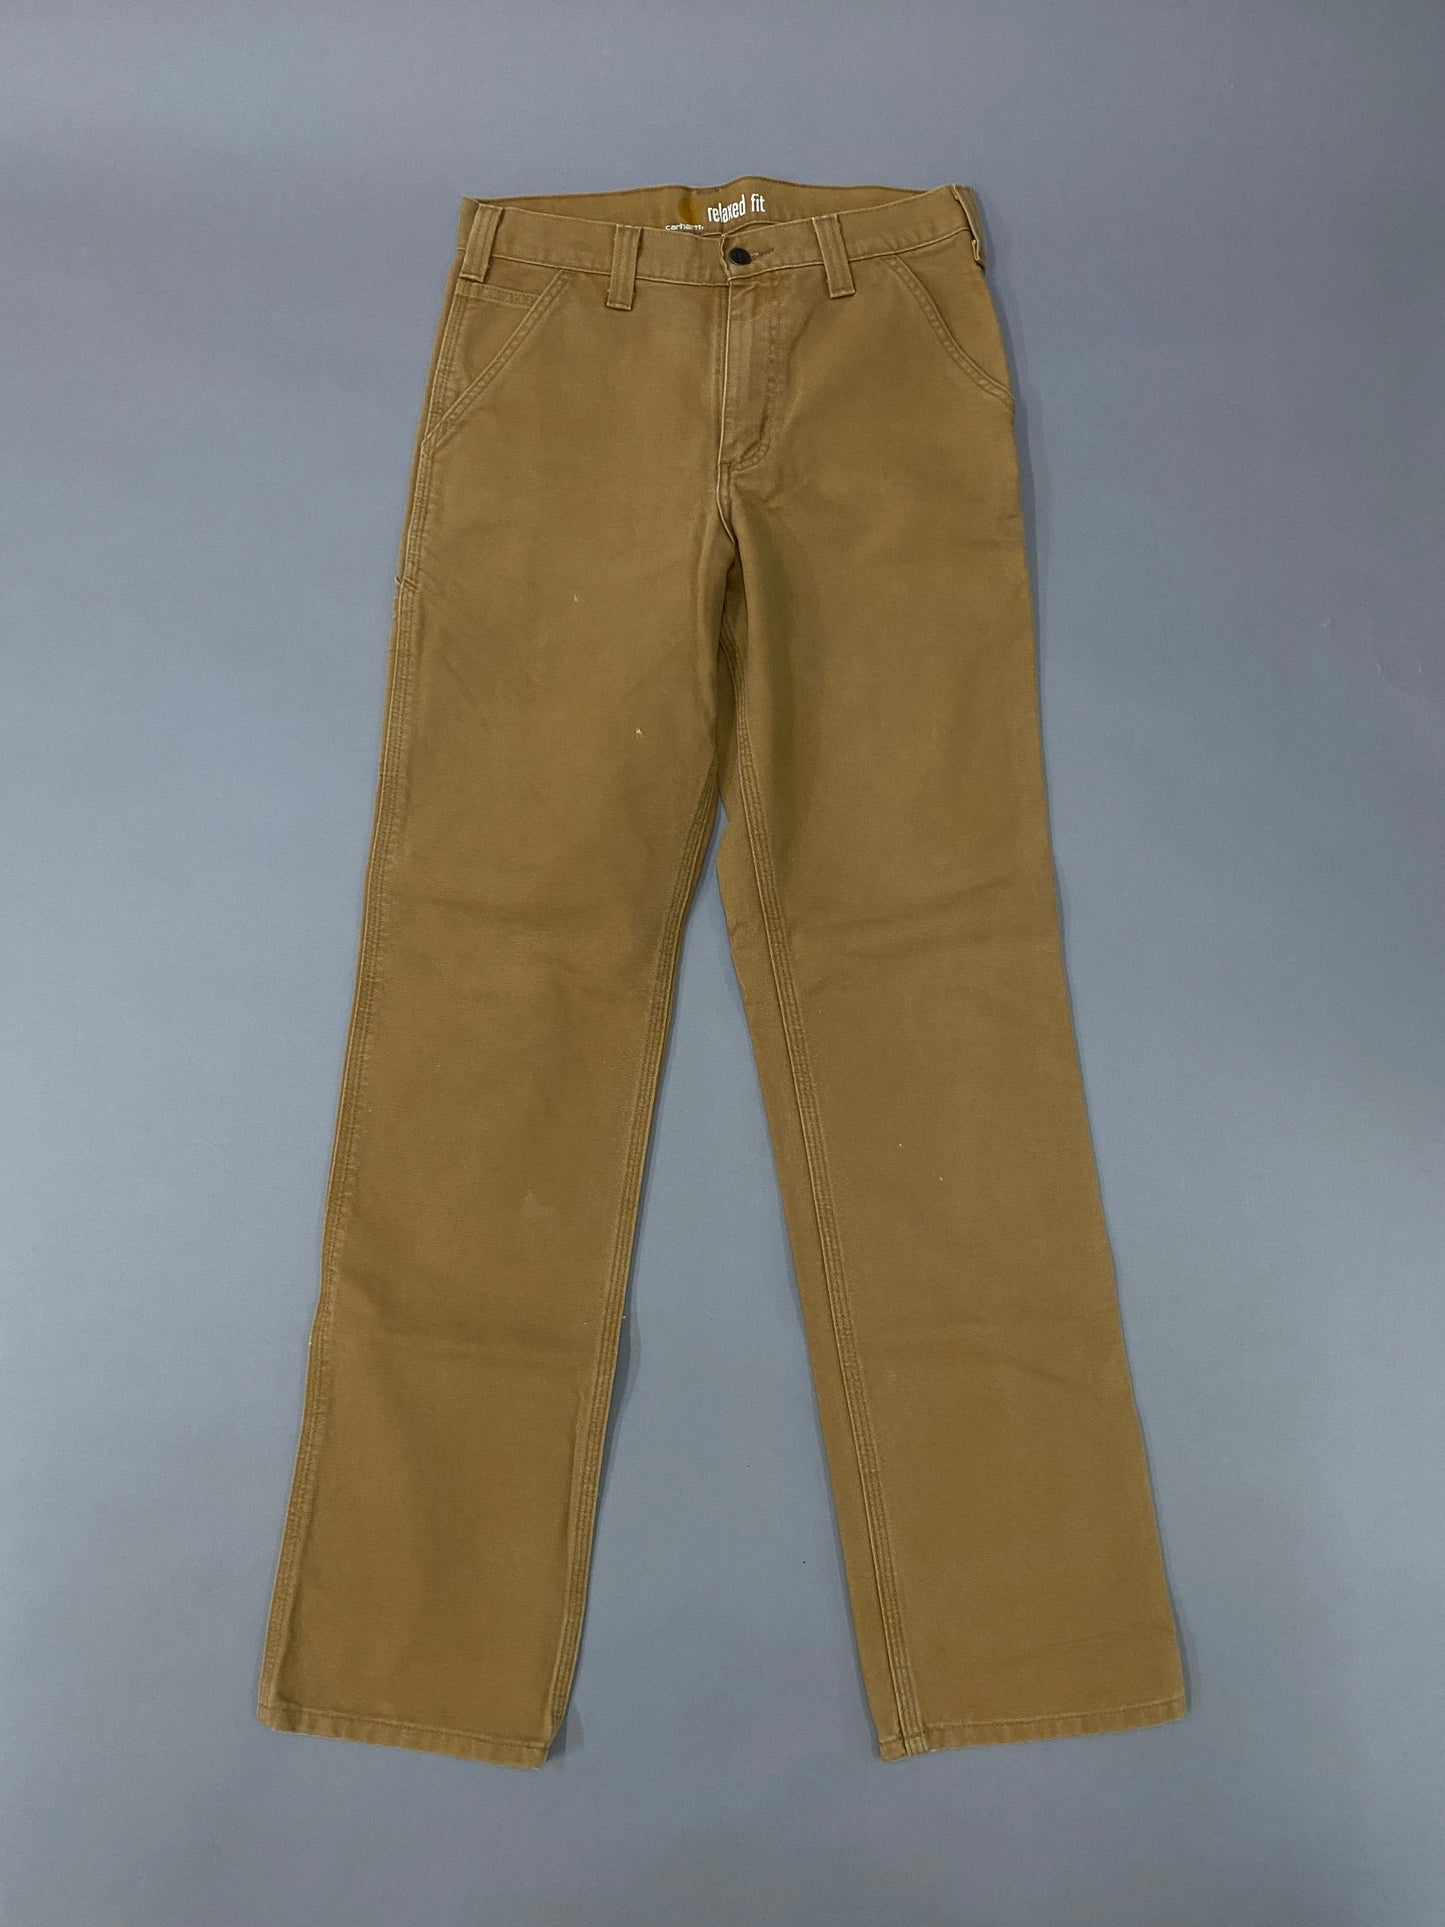 Carhartt Carpenter Pants - 30 x 34